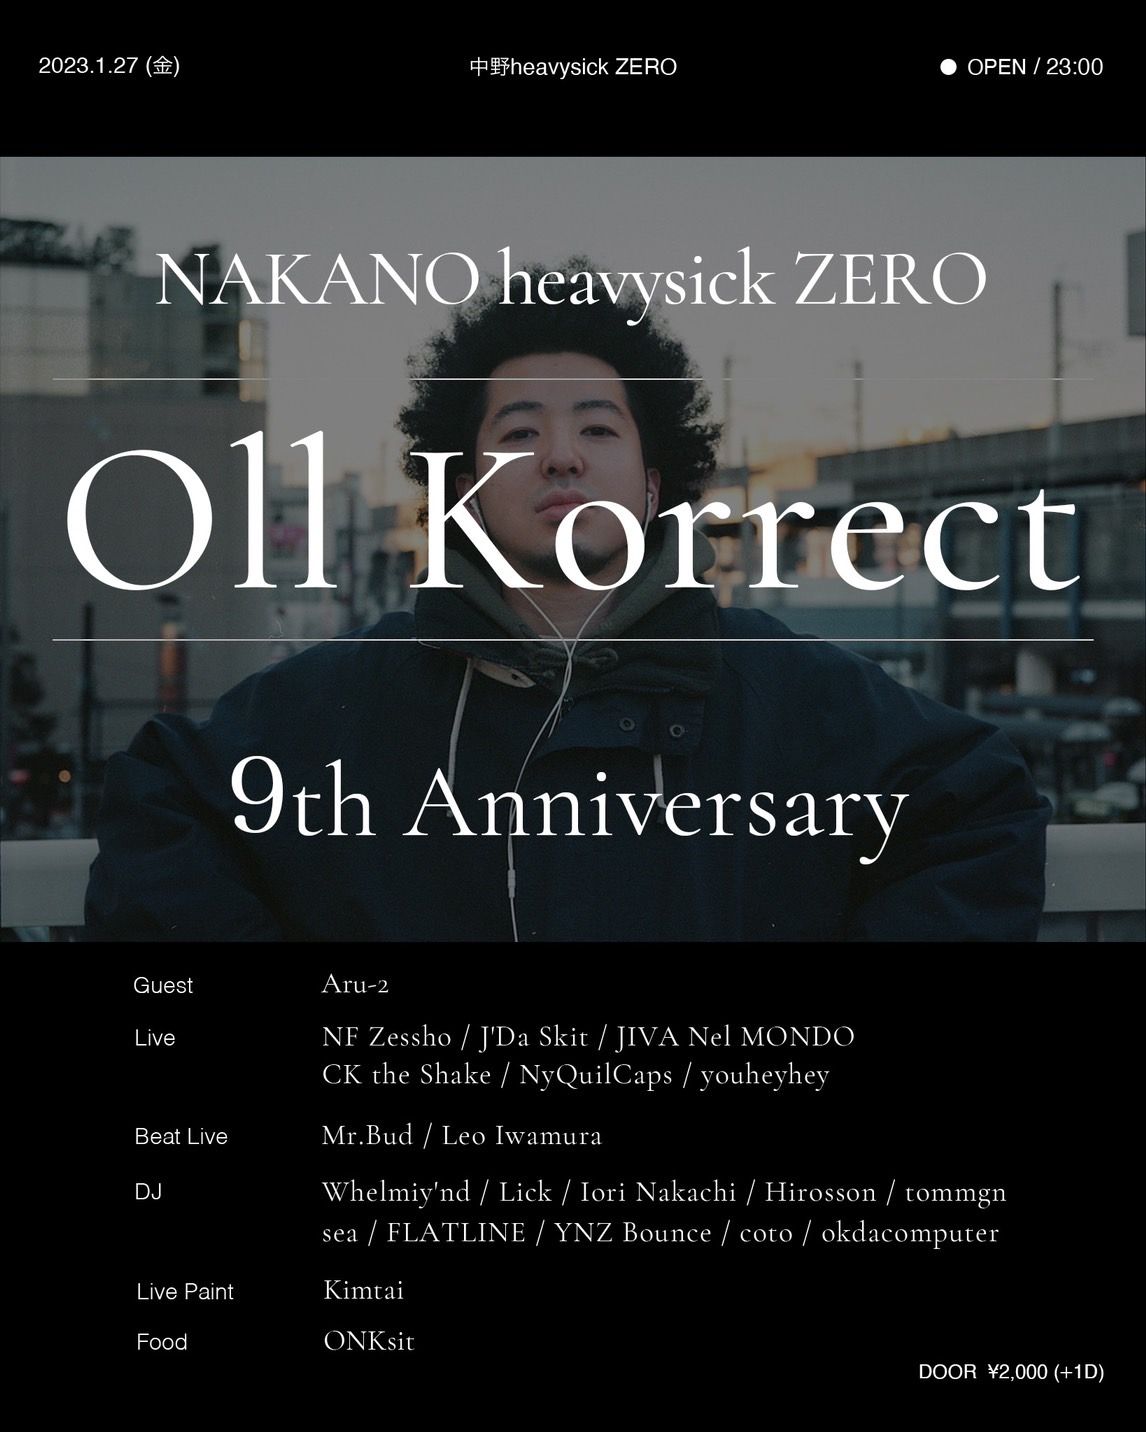 Oll Korrect ～9th Anniversary～